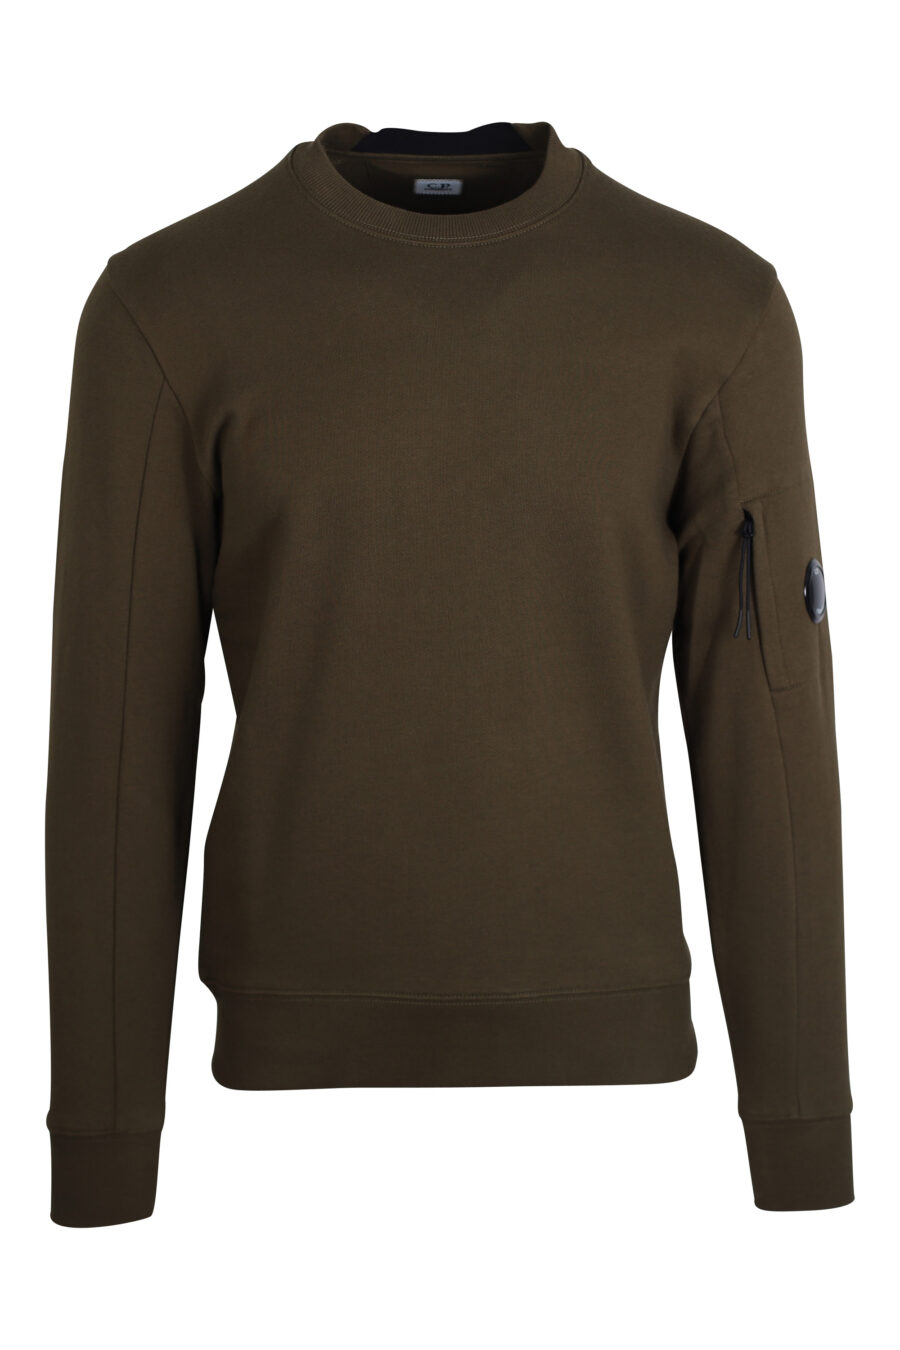 Militärgrünes Sweatshirt mit kreisförmigem Mini-Logo an der Seite - IMG 2456